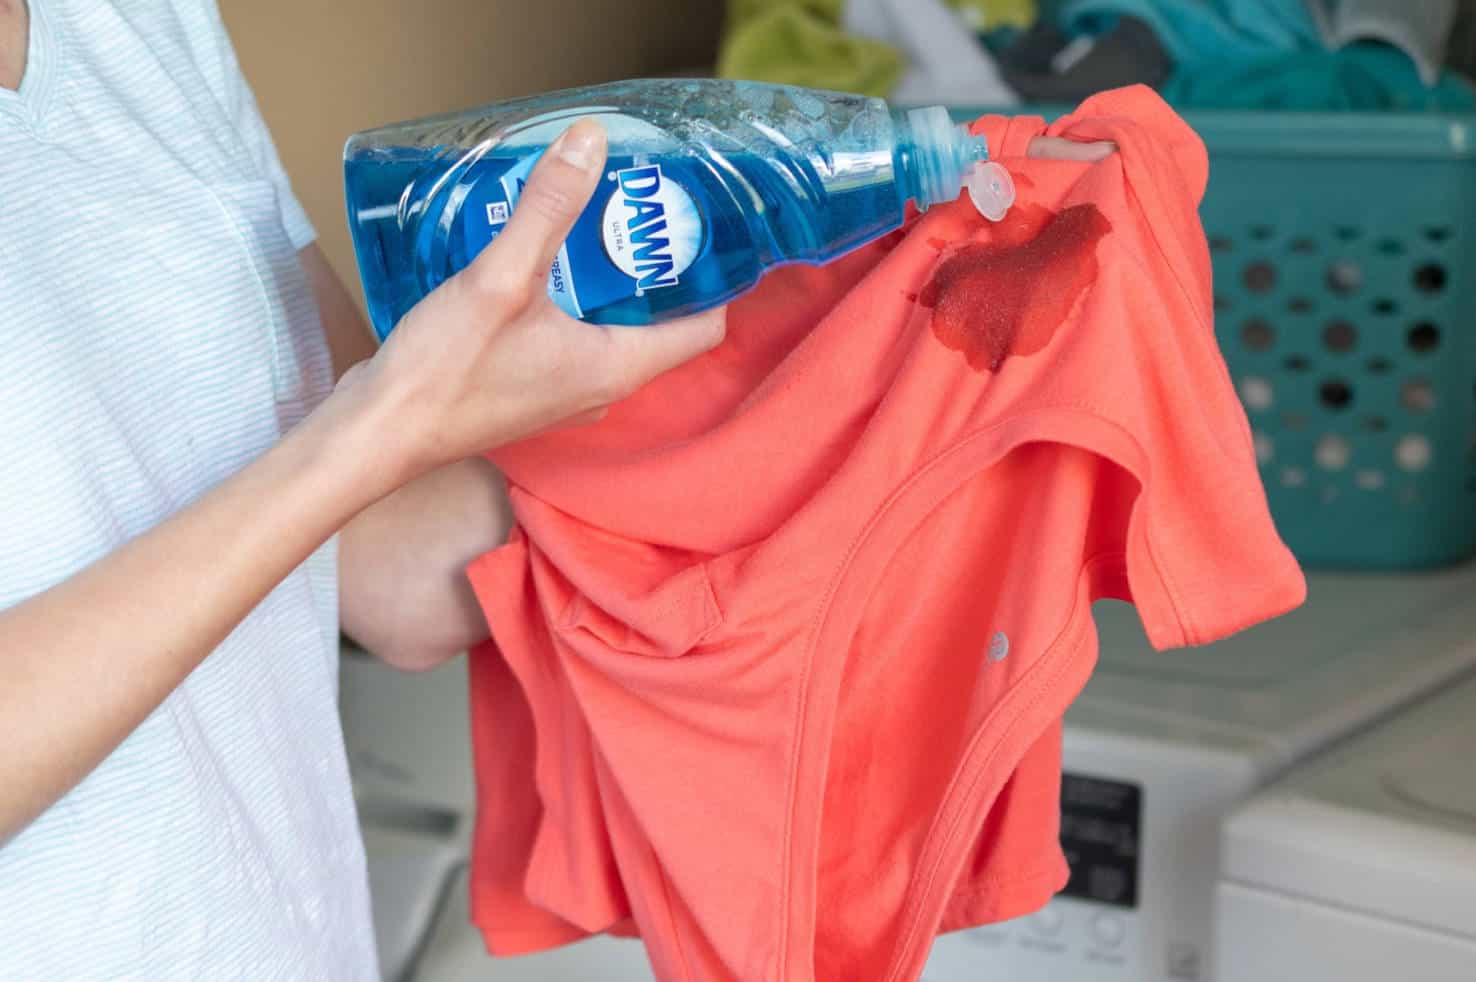 Use dishwashing liquid to remove stains